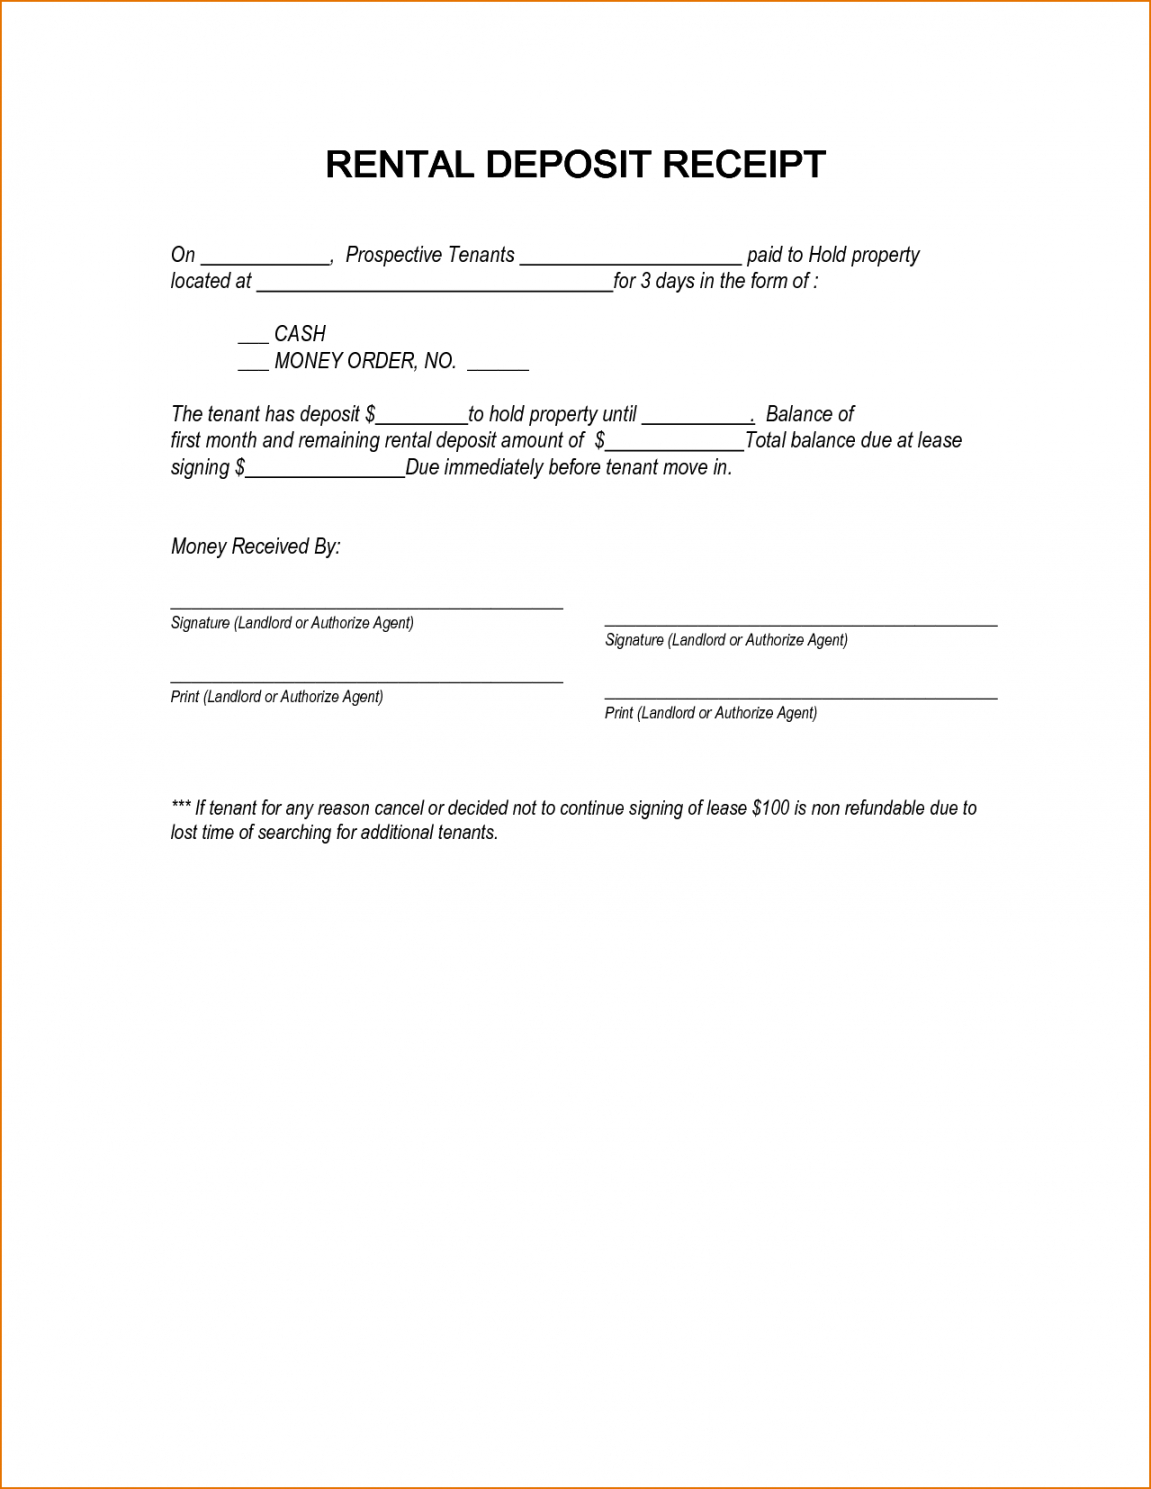 sample deposit payment receipt template  toibtk holding deposit form template doc